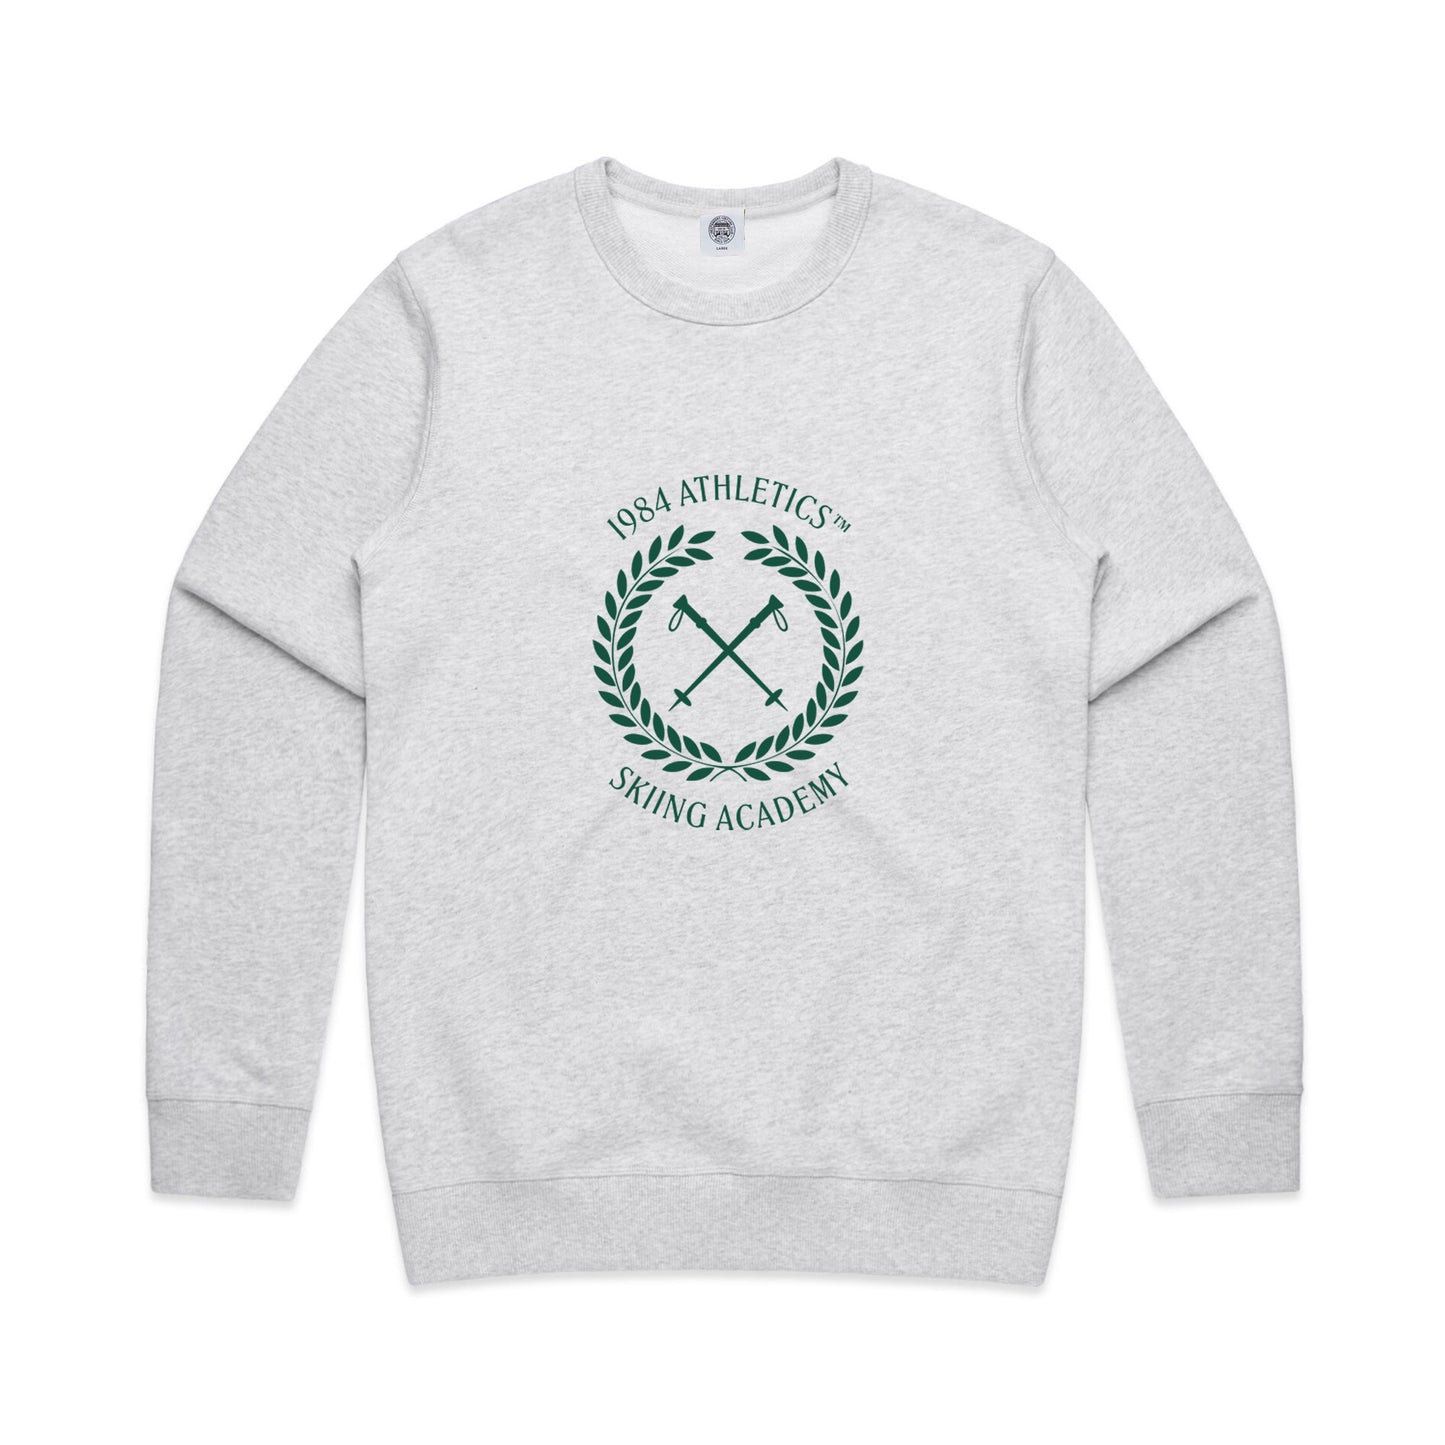 Vice 84 'Ski Academy' Crew Sweater - Ash Grey